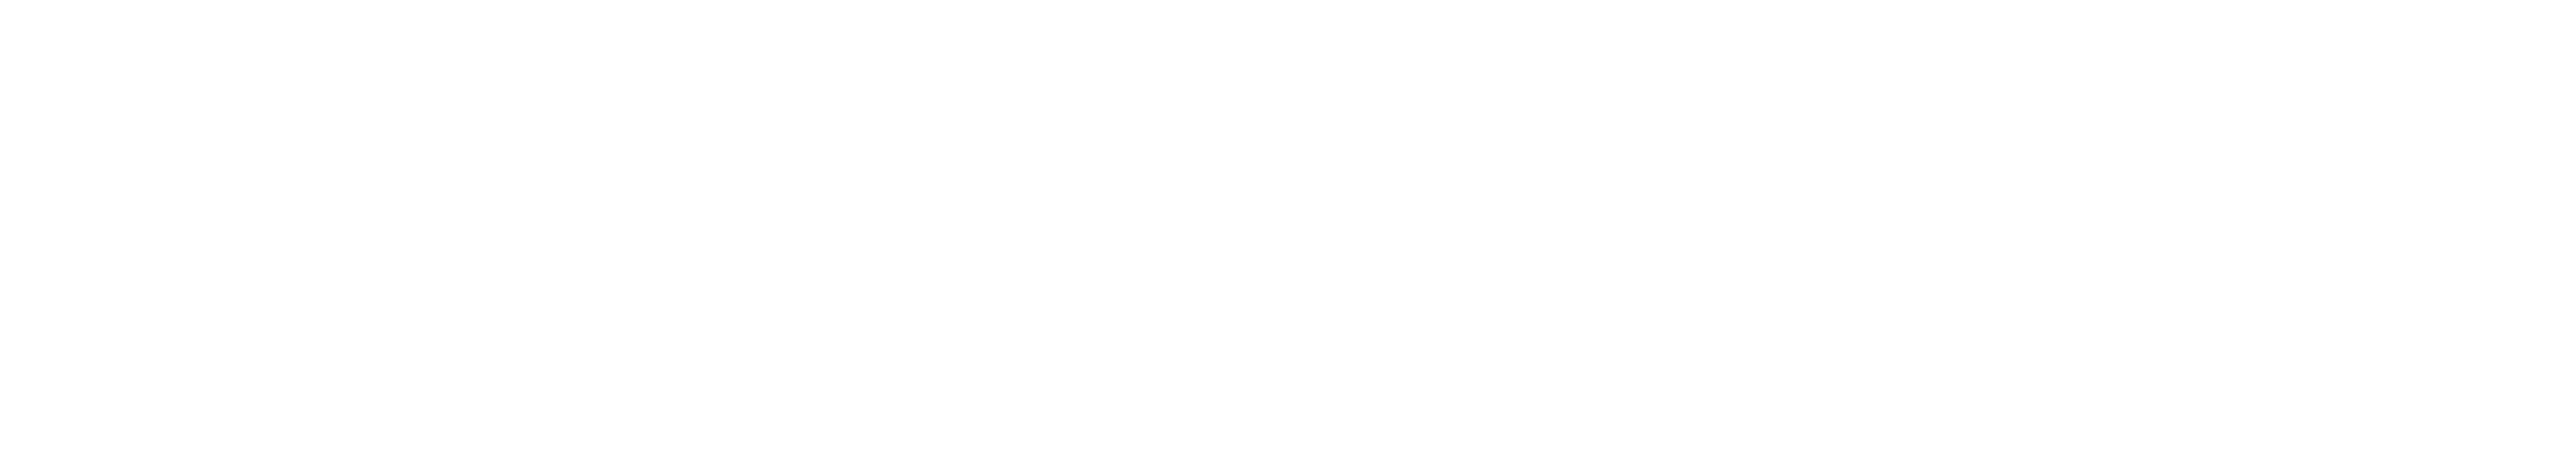 Unipart Logistics White Logo